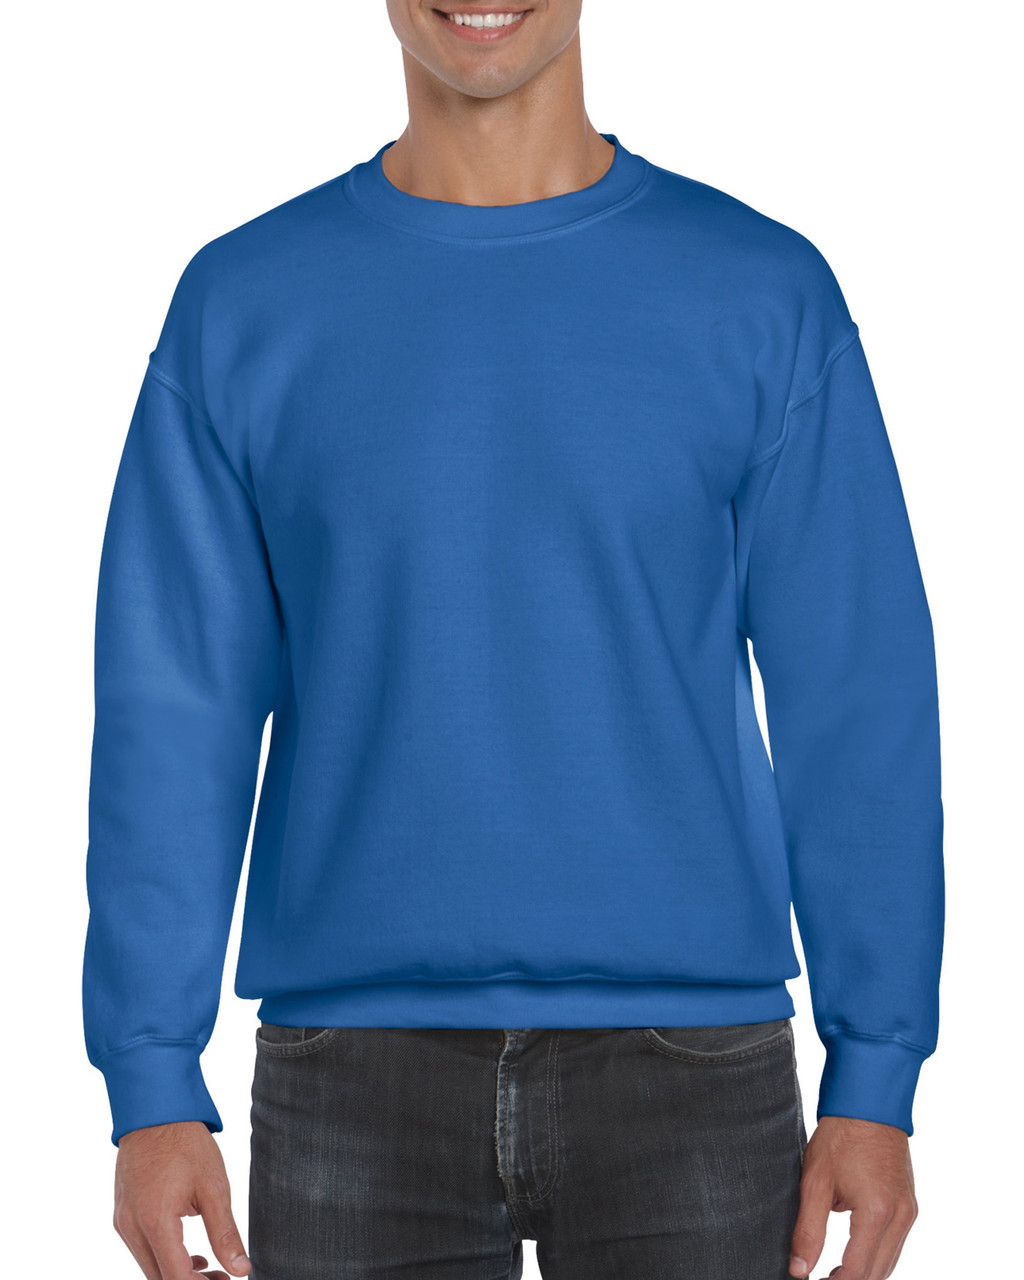 DryBlend Adult Set-In Sweatshirt 12000 